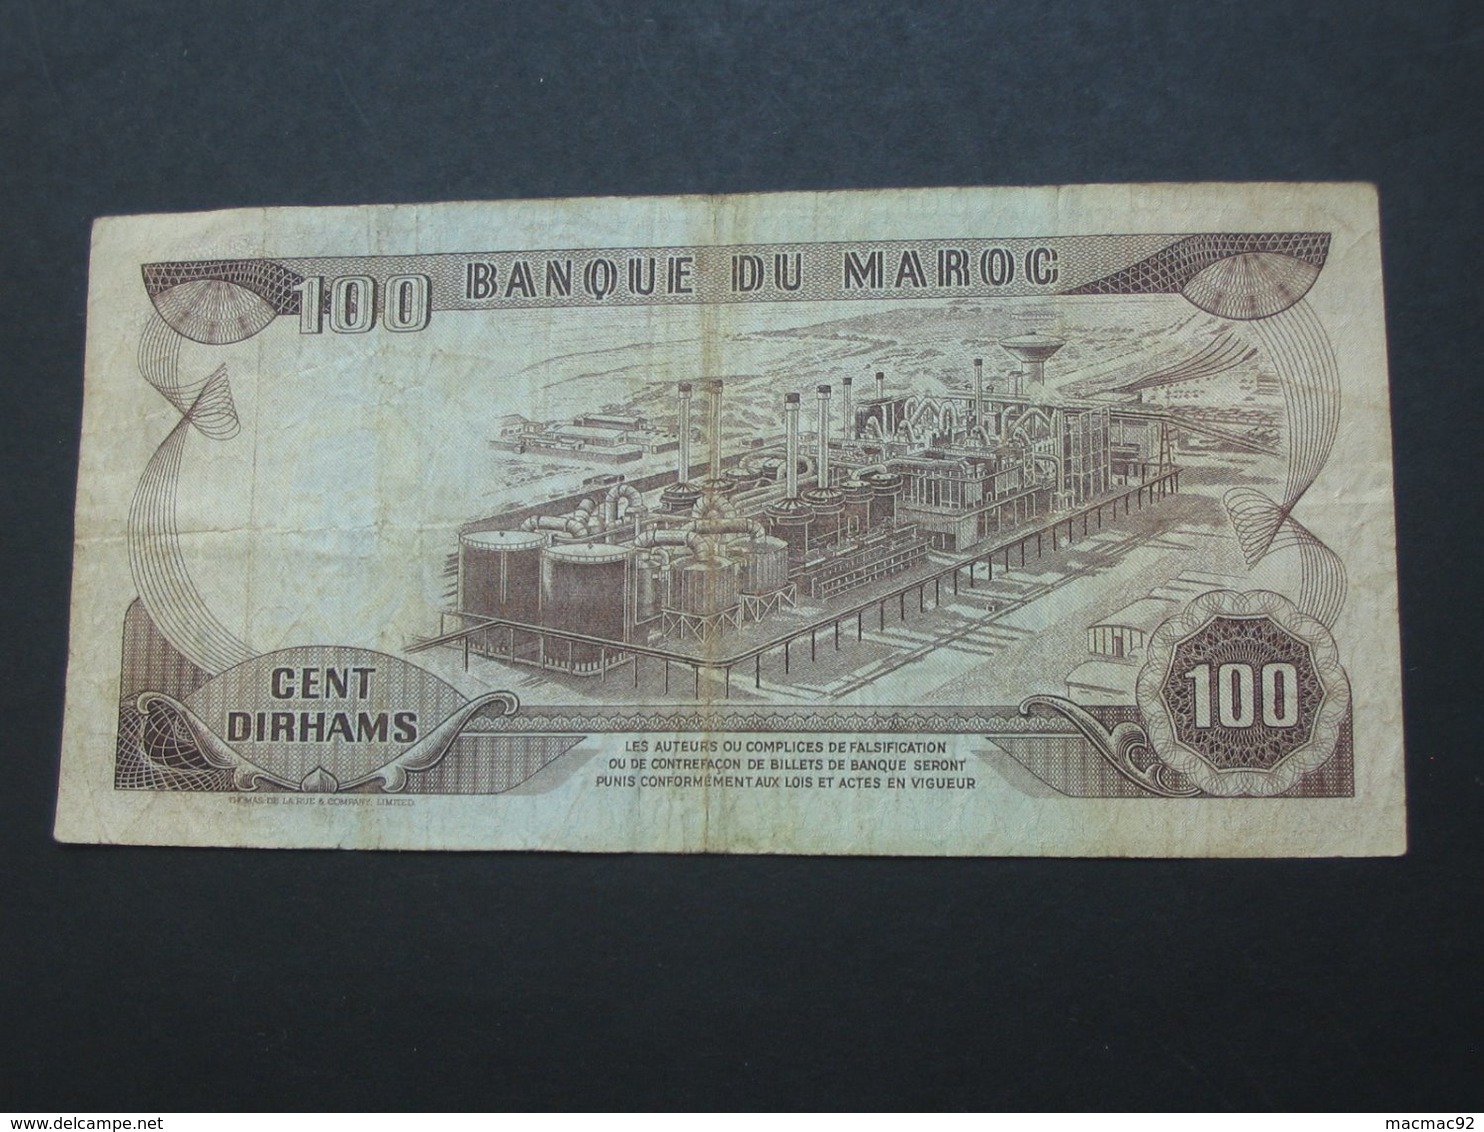 100 Dirhams 1970-1390 Maroc - Banque Du Maroc **** EN ACHAT IMMEDIAT **** - Marruecos